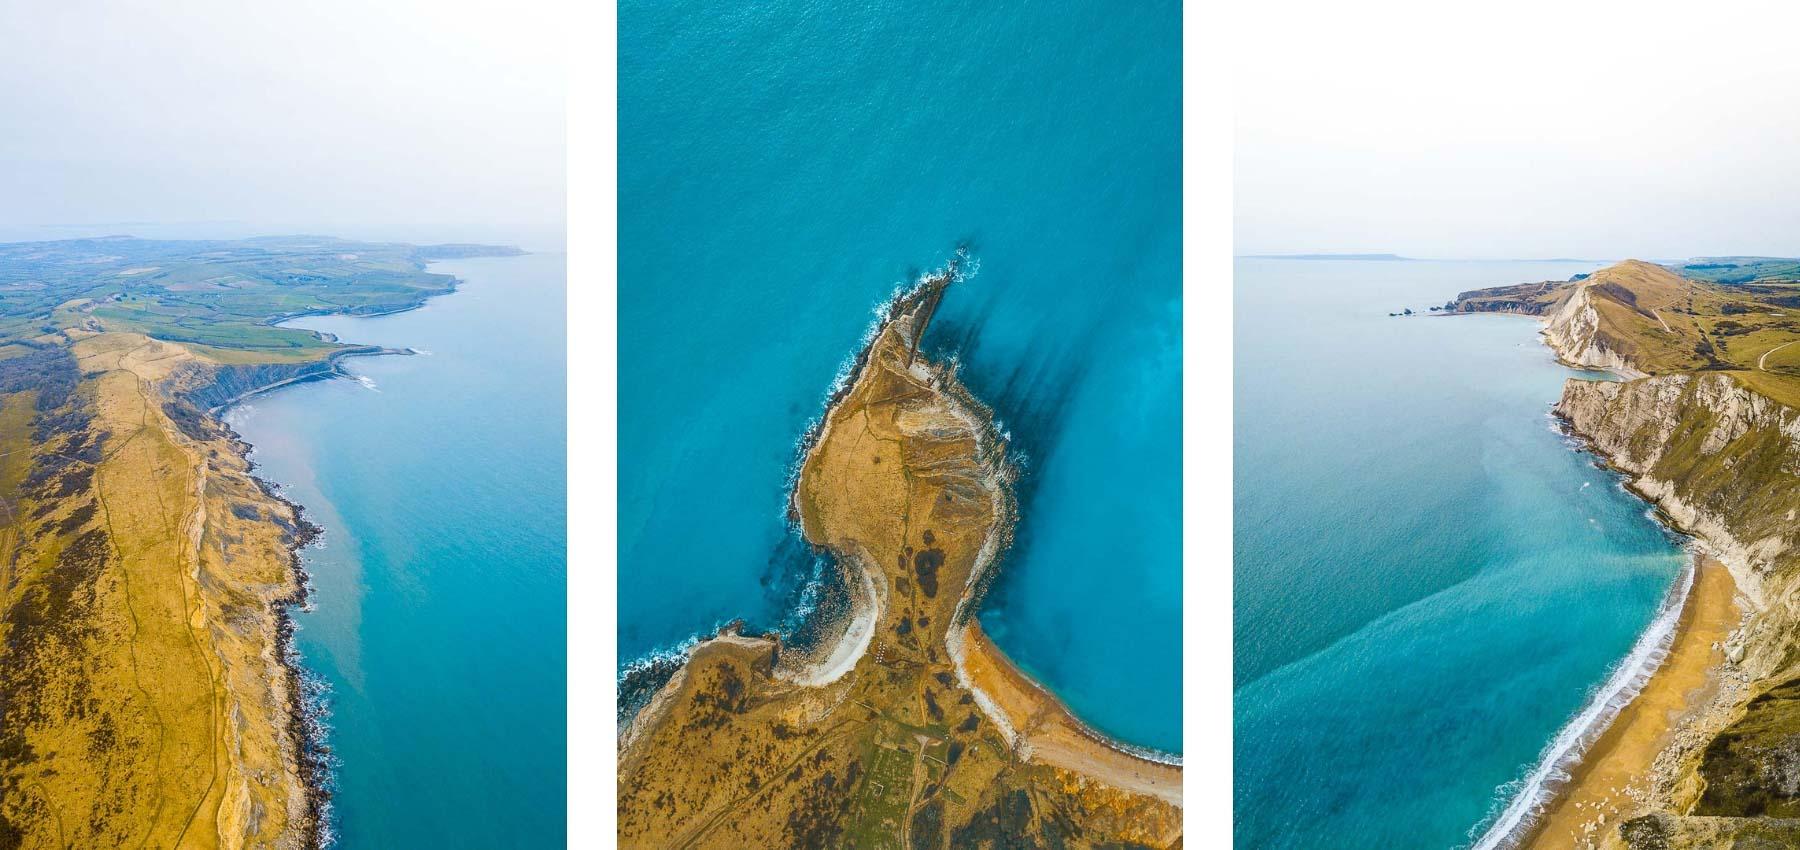 jurassic coast england photos collage 5